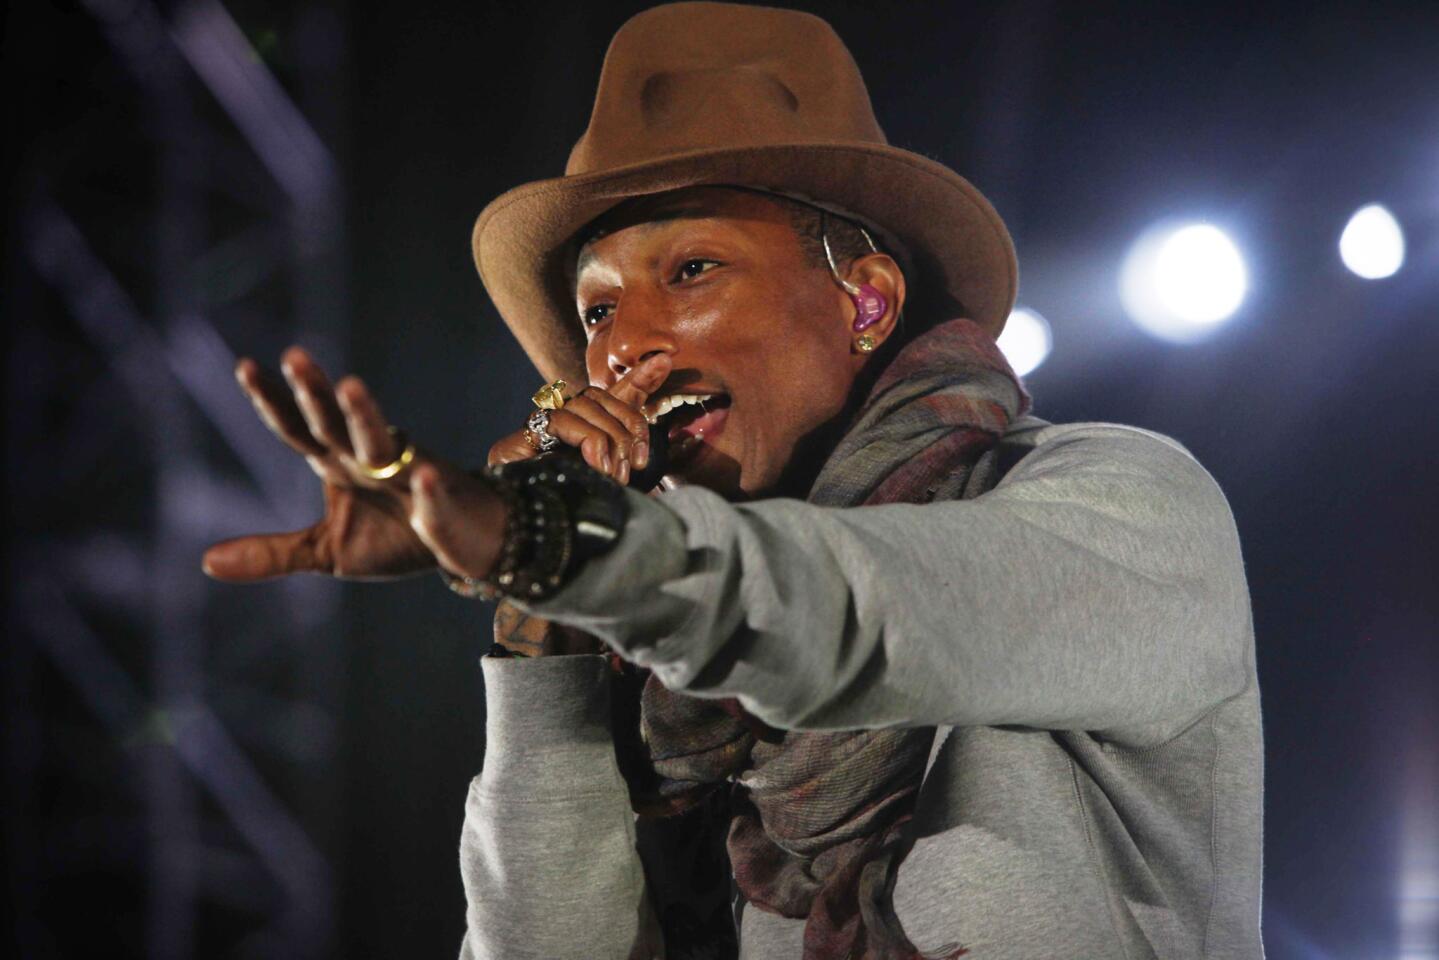 The 2014 fashions of Pharrell Williams